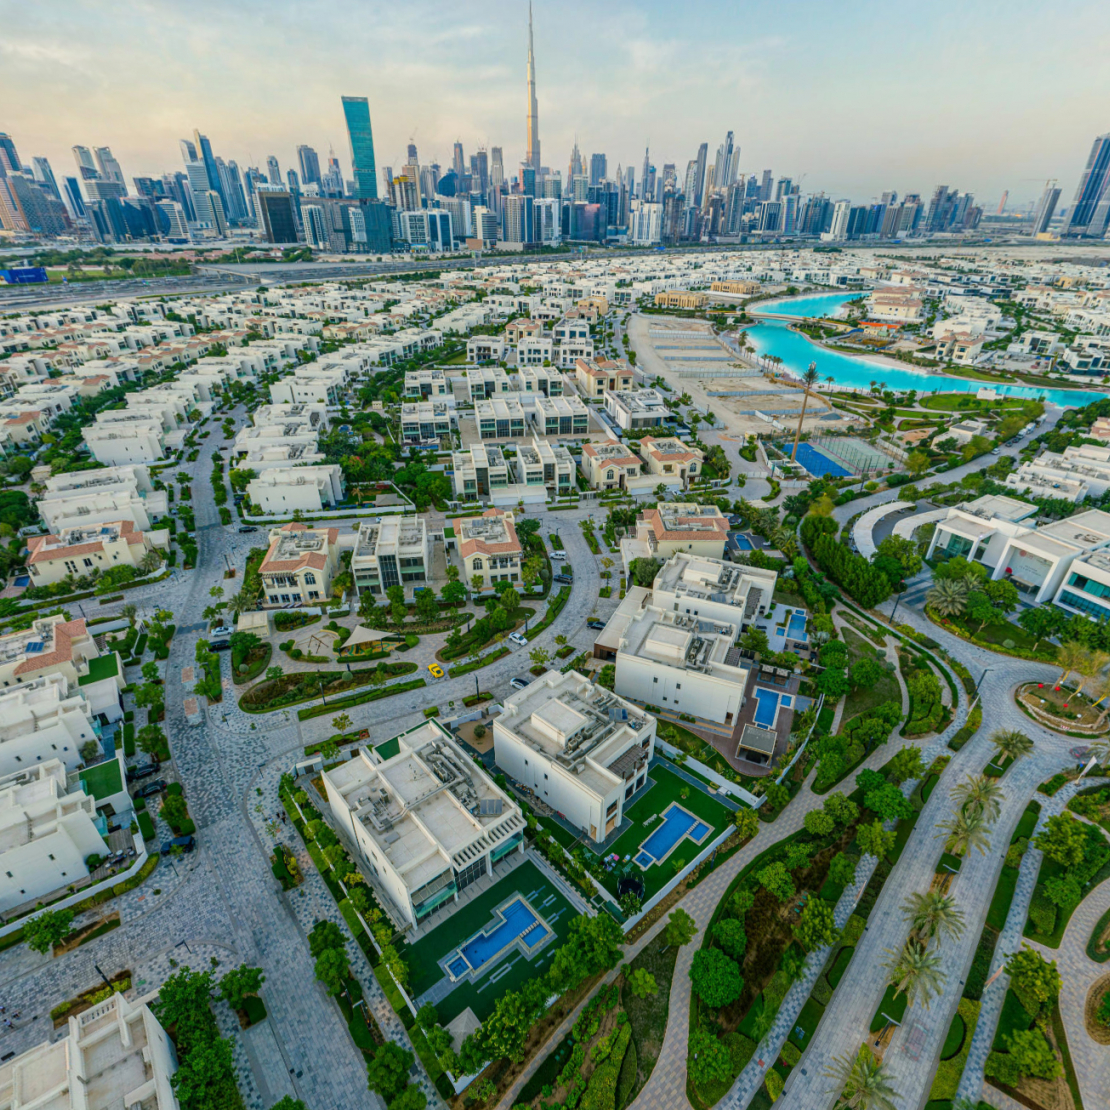  kiromarble project Mohammed Bin Rashed Al Maktoum City